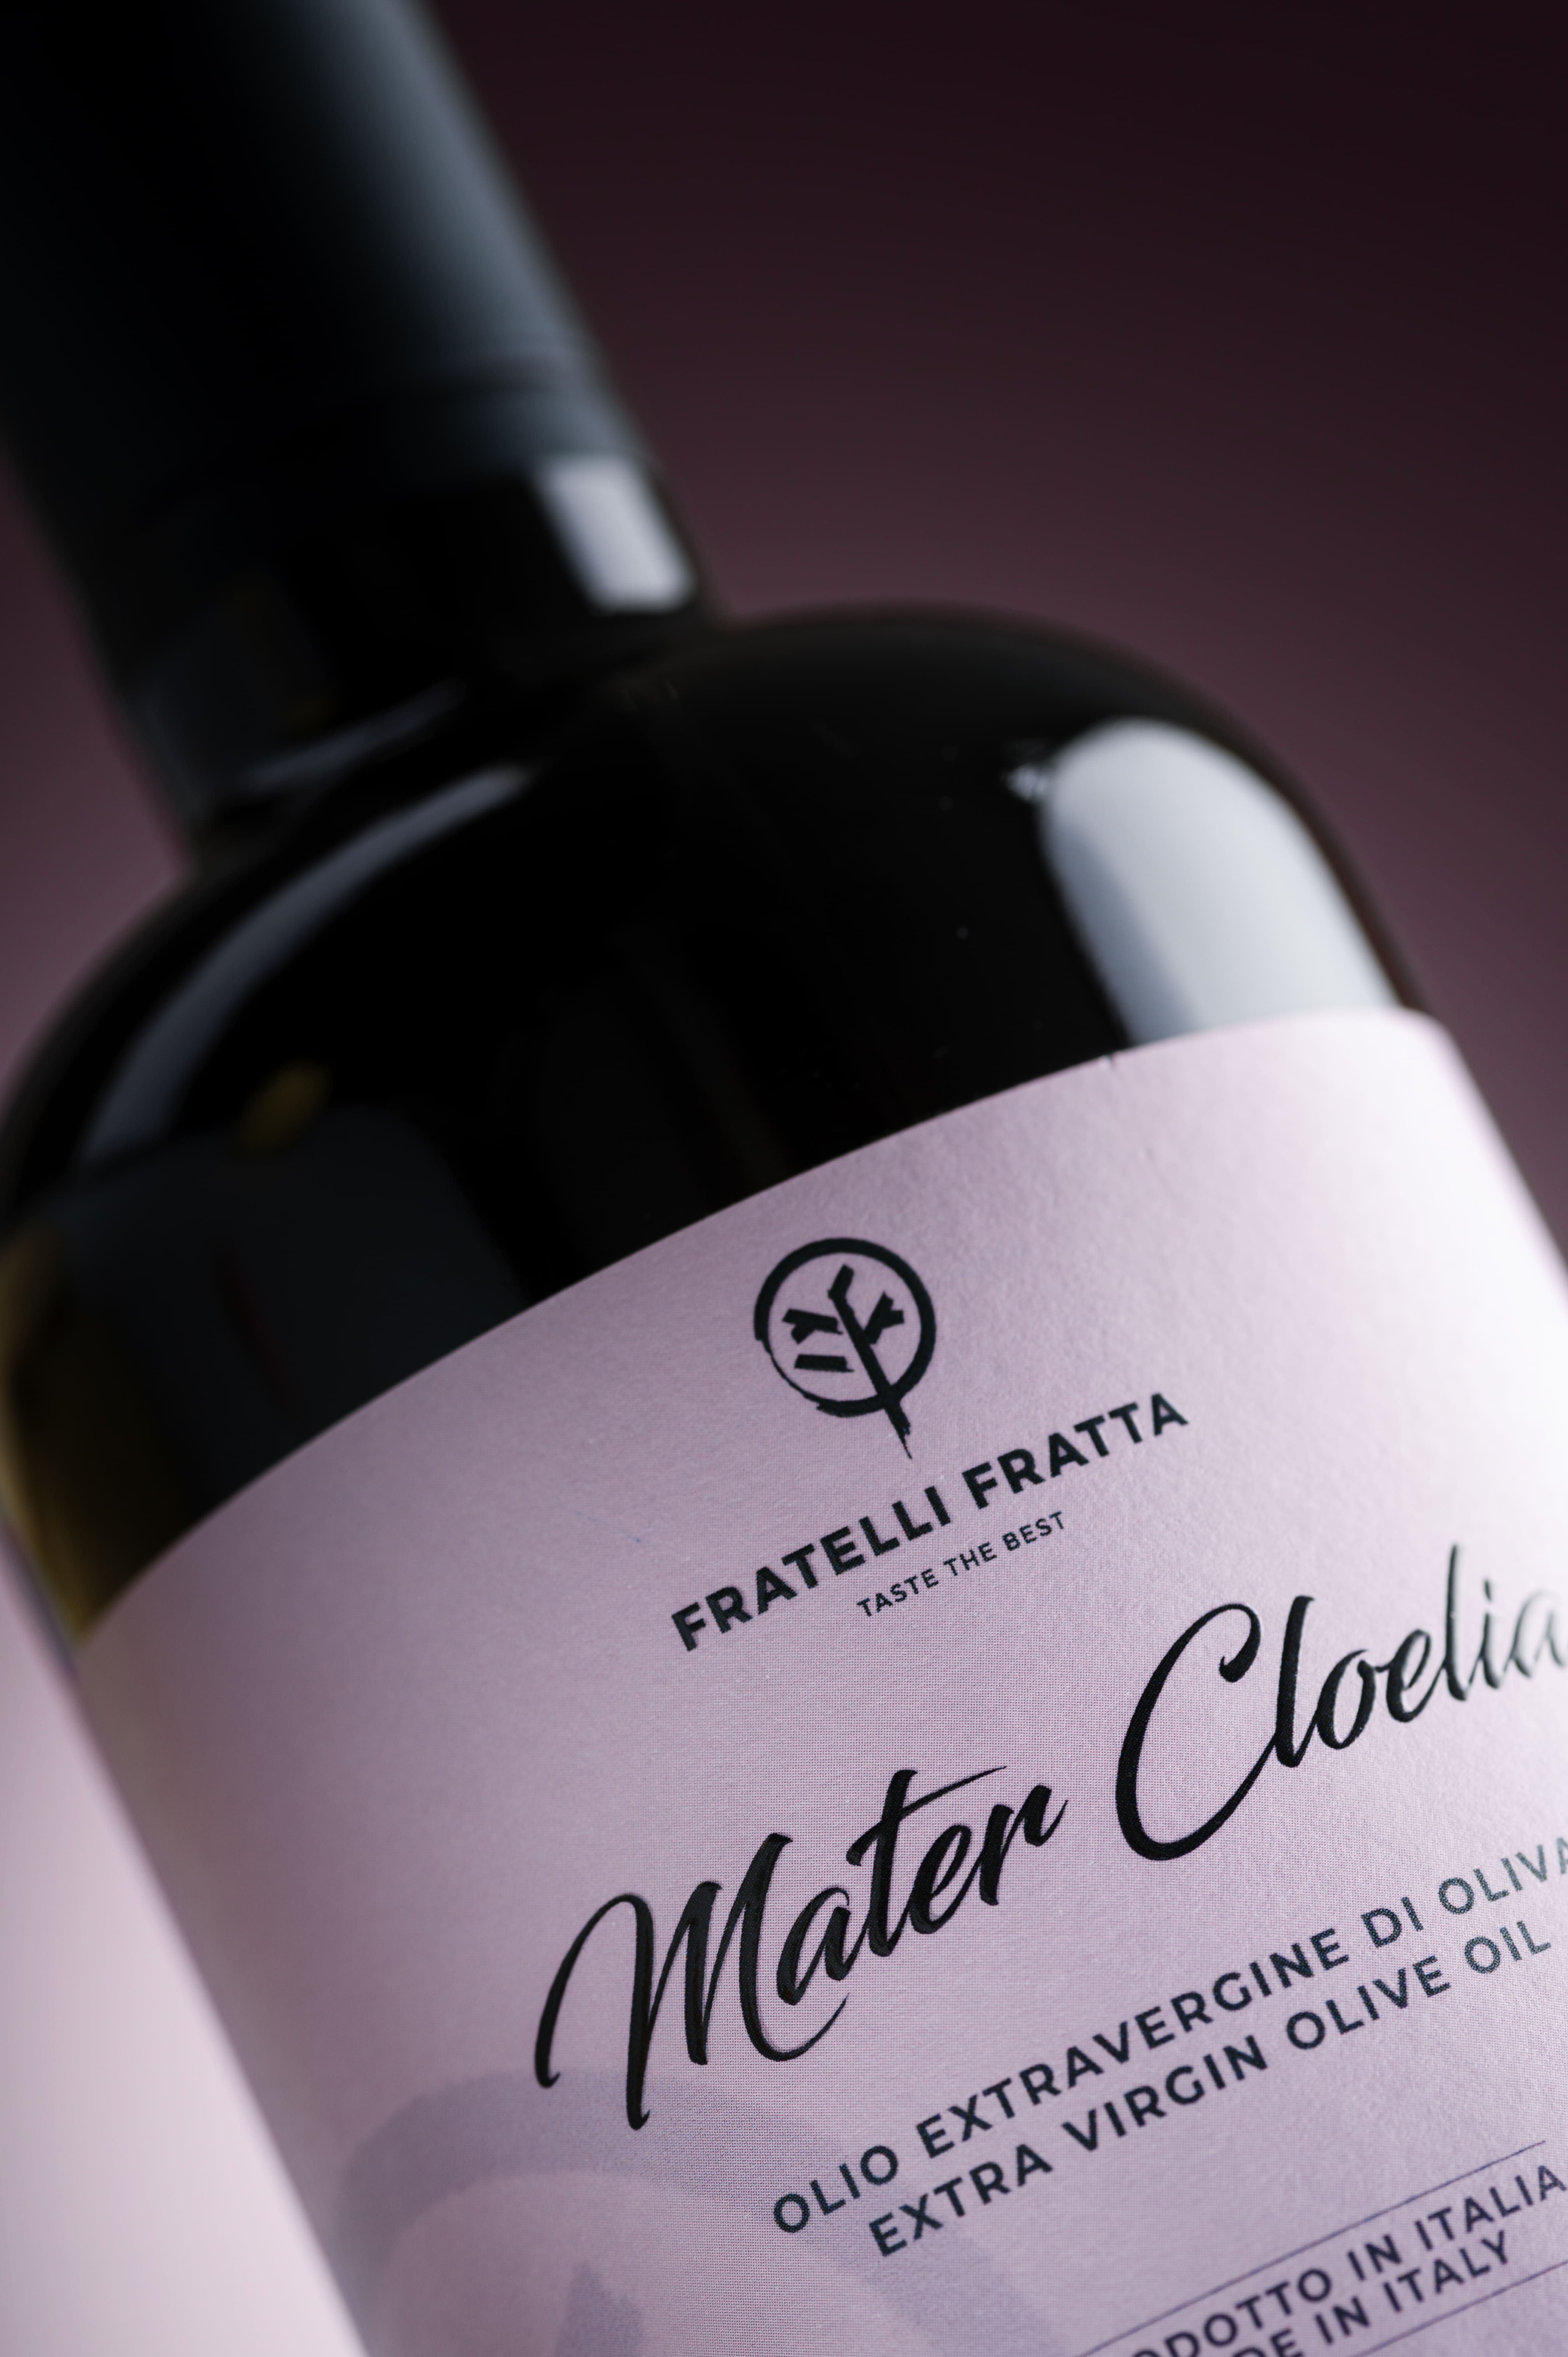 Mater Cloelia Extra virgin olive oil